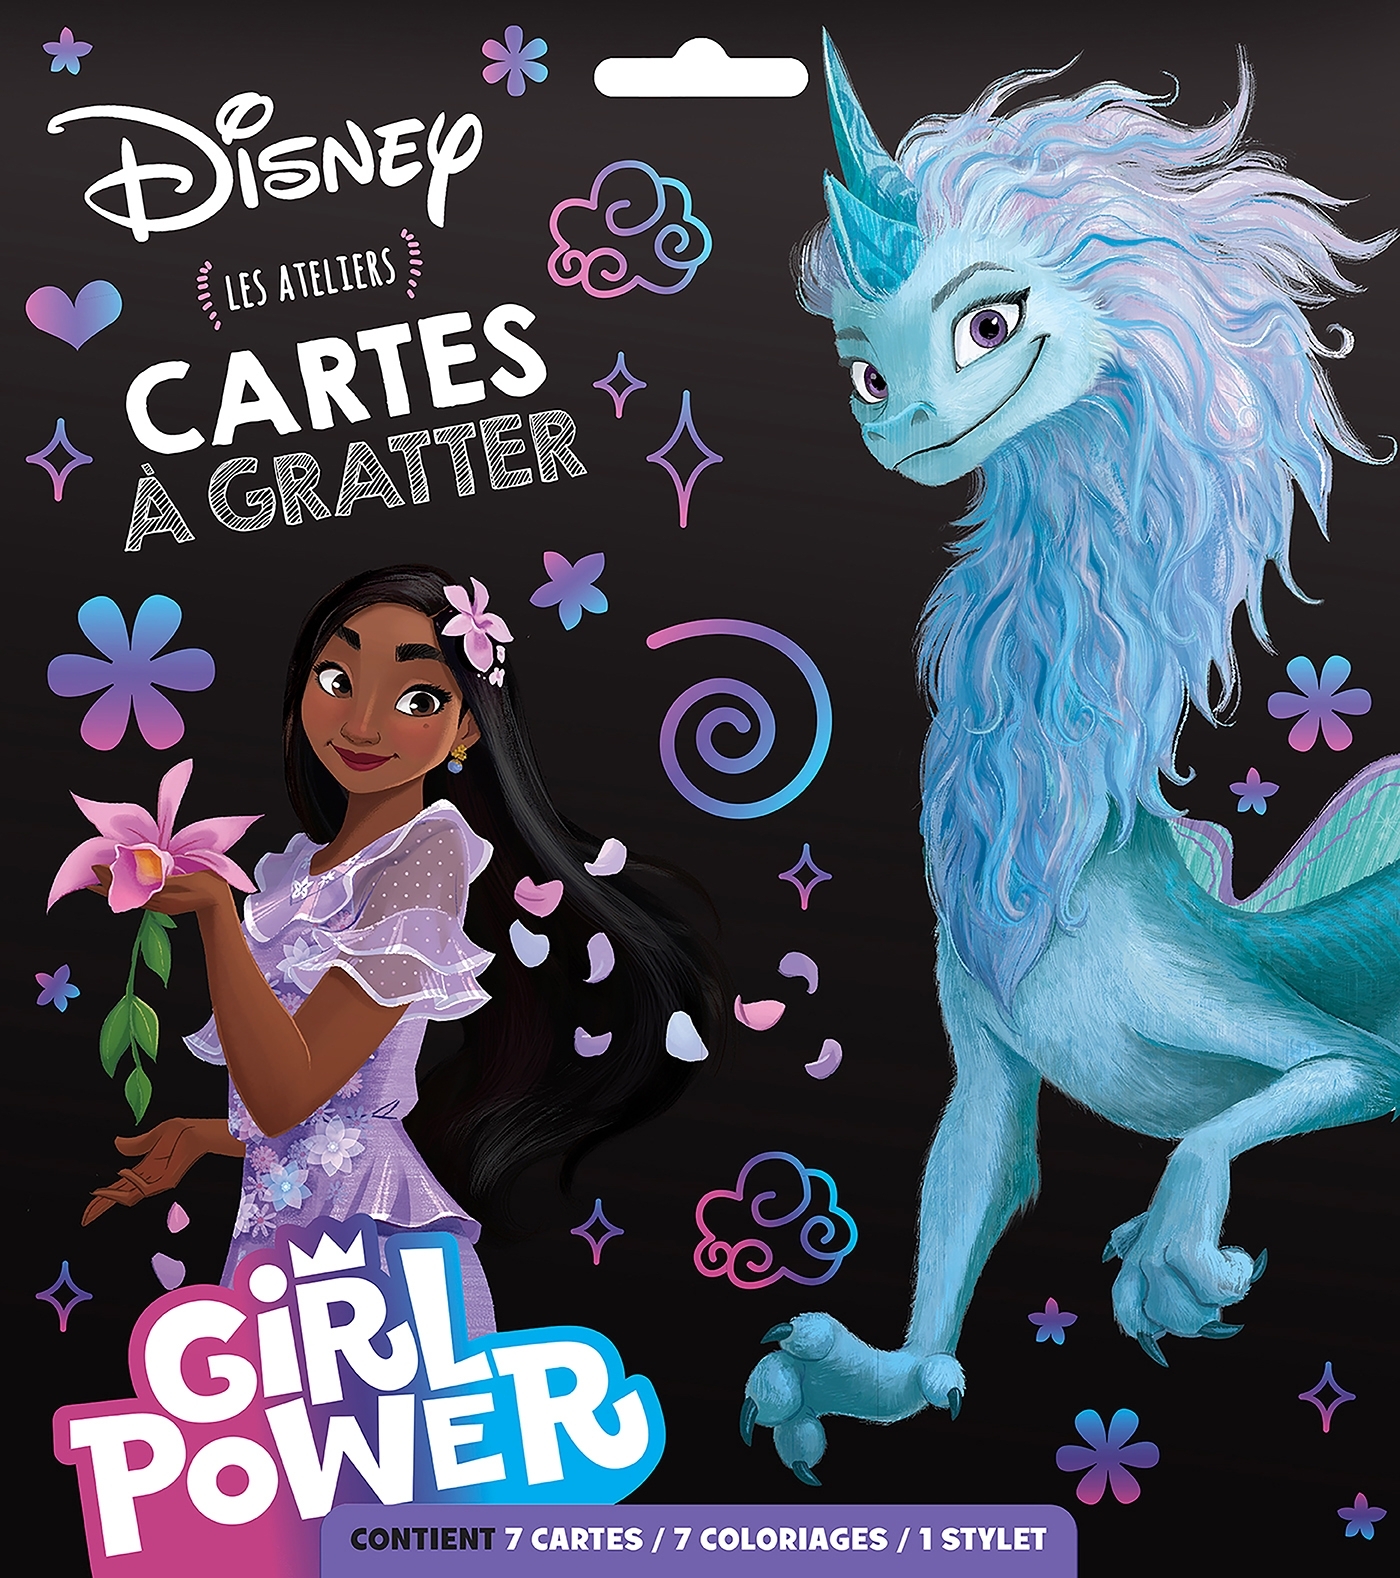 Disney - Cartes à gratter : Disney Princess